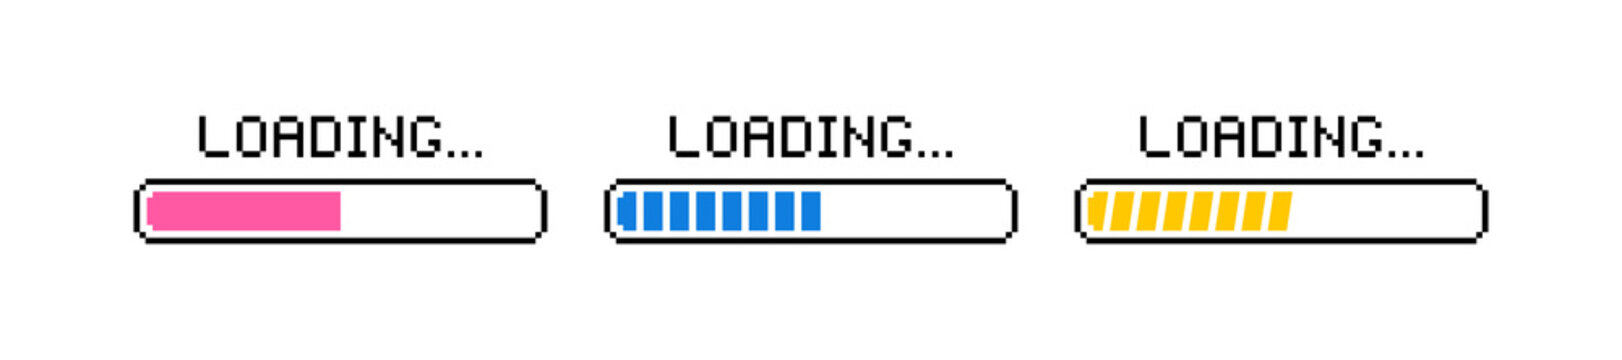 Pixel art 8-bit loading bar concept. Loading or Installing process. Vector illustration